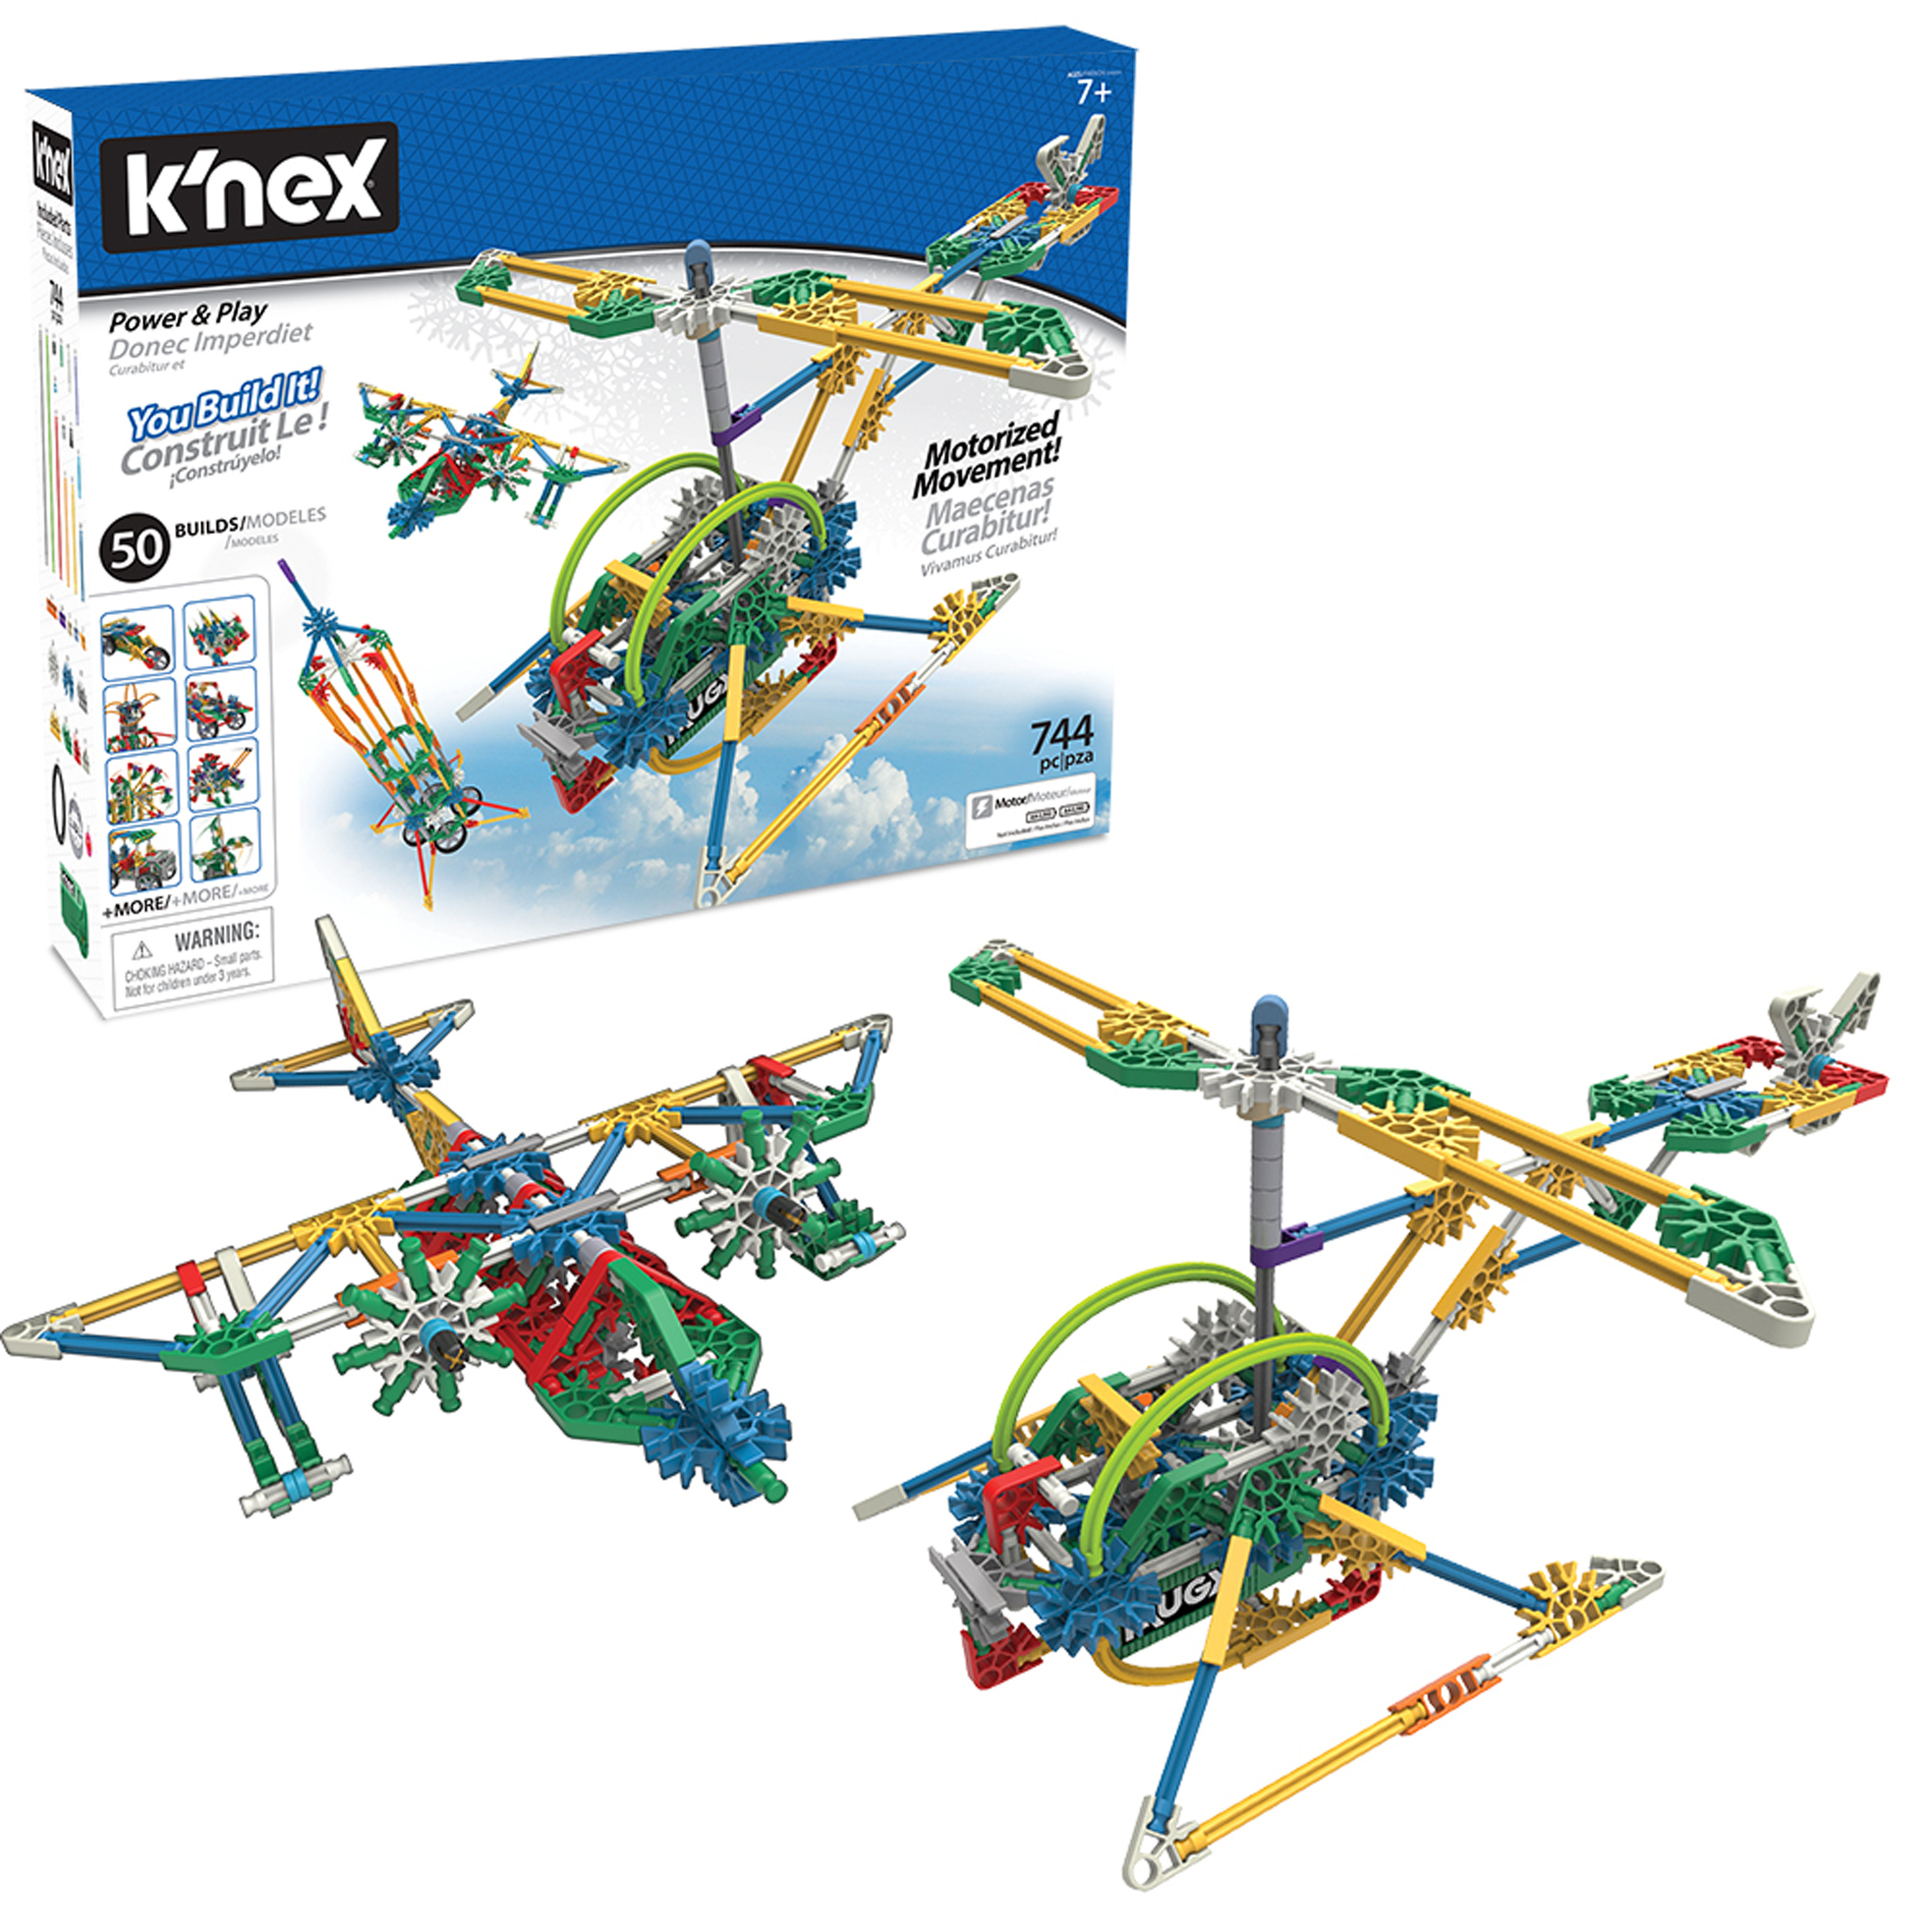 K'NEX Imagine - Power & Play Motorized Building Set - Creative Building Toy - image 1 of 21